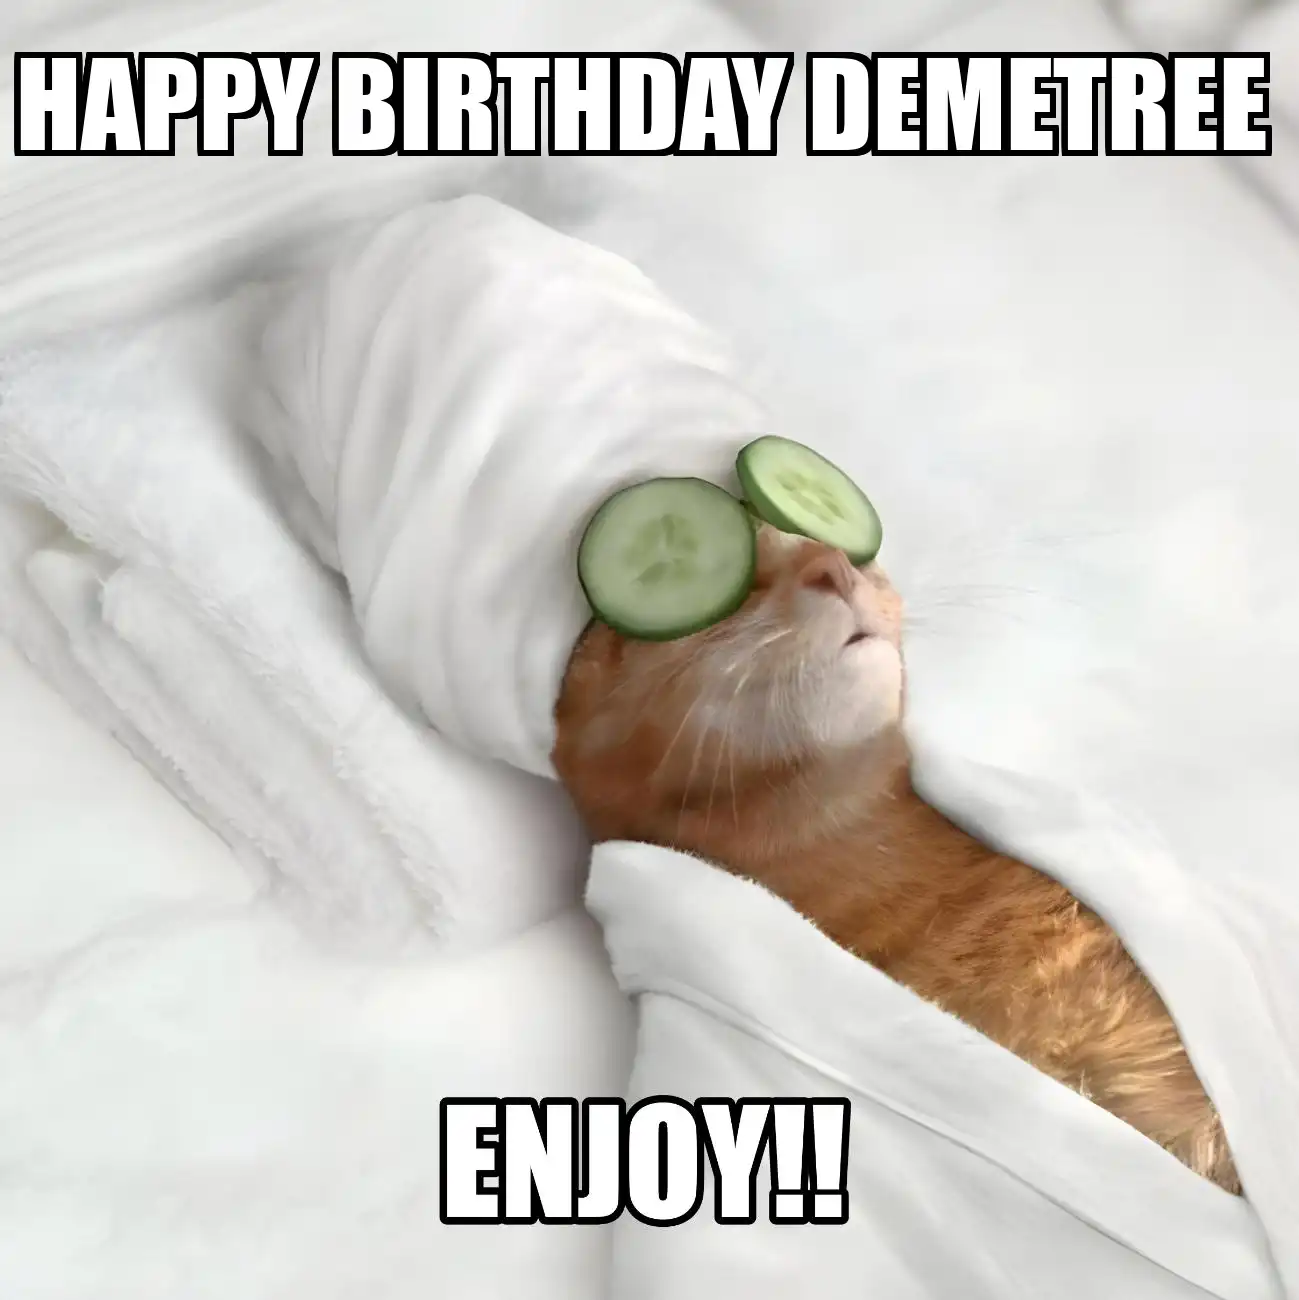 Happy Birthday Demetree Enjoy Cat Meme